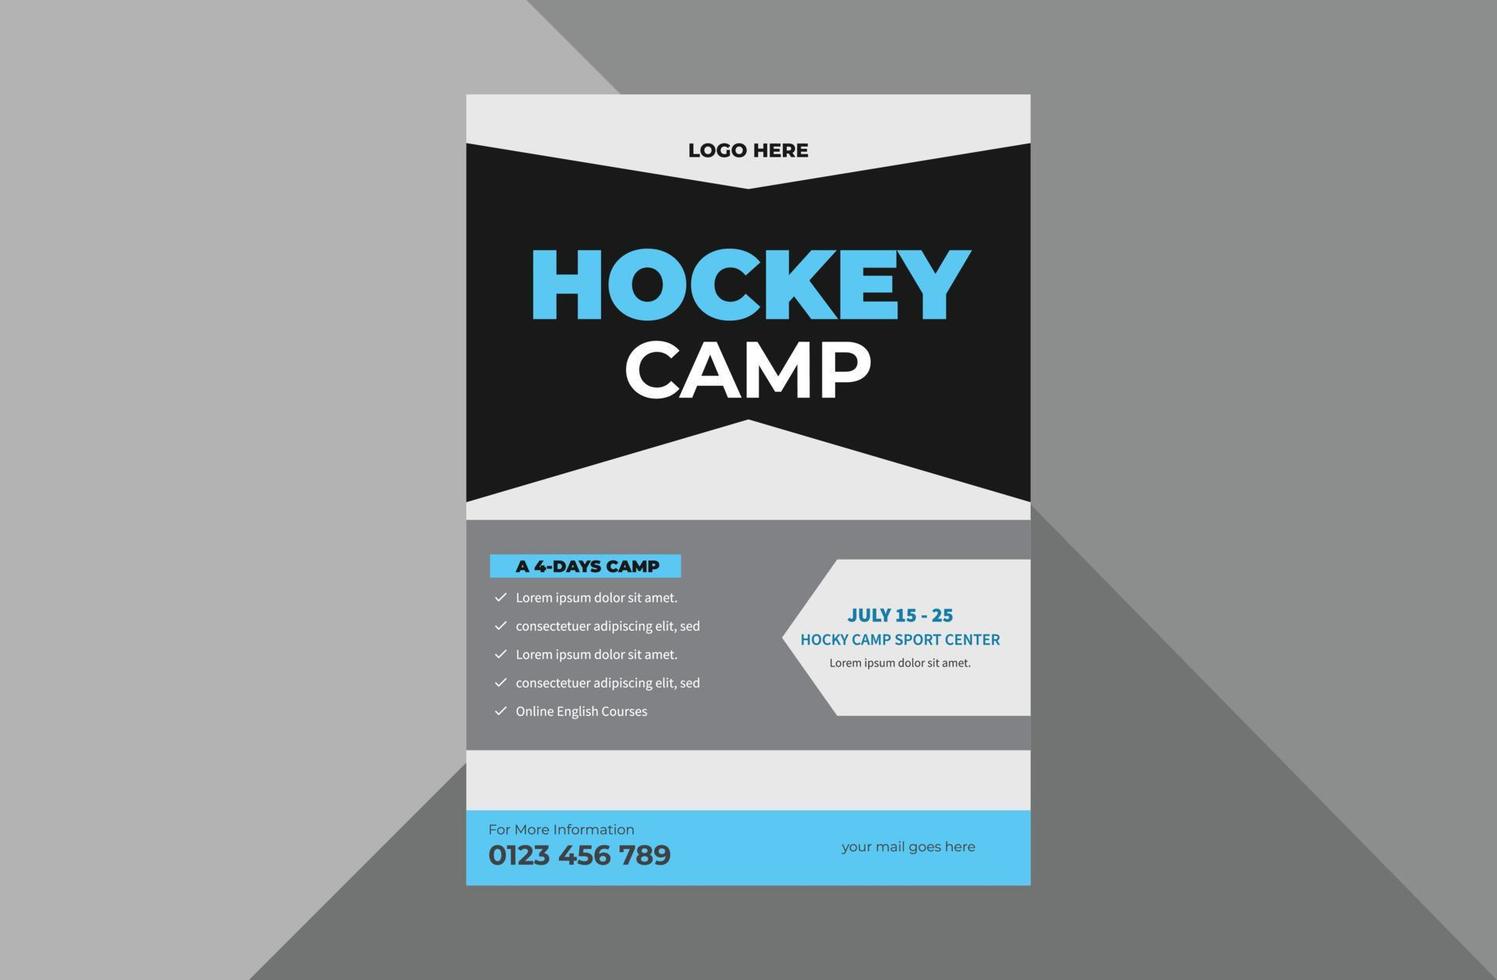 Entwurfsvorlage für Hockeycamp-Flyer. Sportereignis-Plakat-Broschürendesign. Hockeysport-Flyer. A4-Vorlage, Broschürendesign, Cover, Flyer, Poster, druckfertig vektor